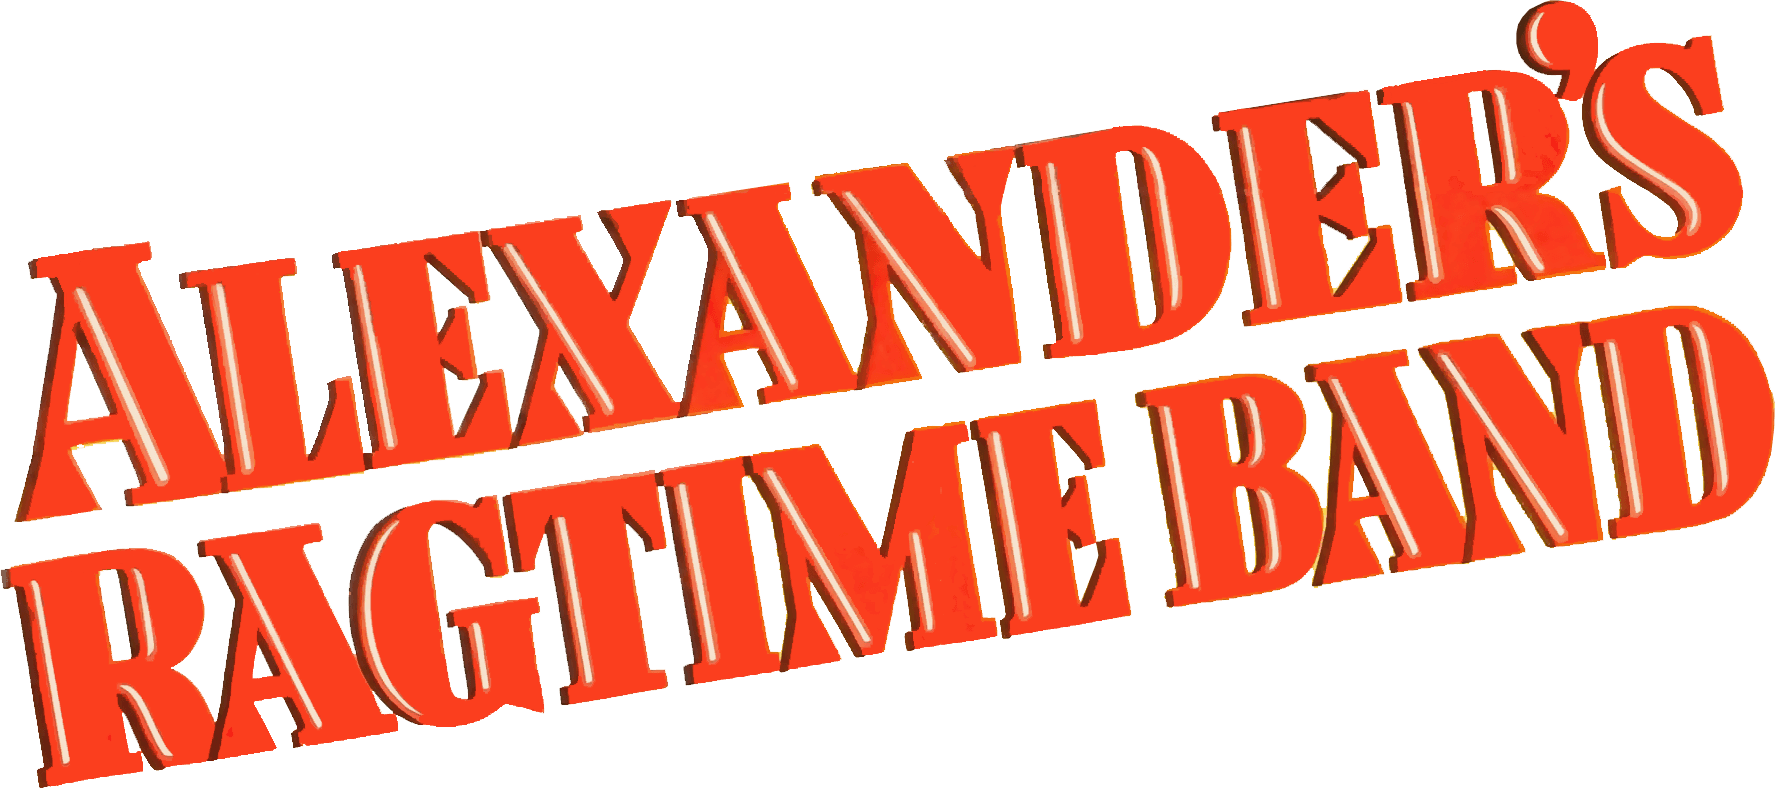 Alexander's Ragtime Band logo